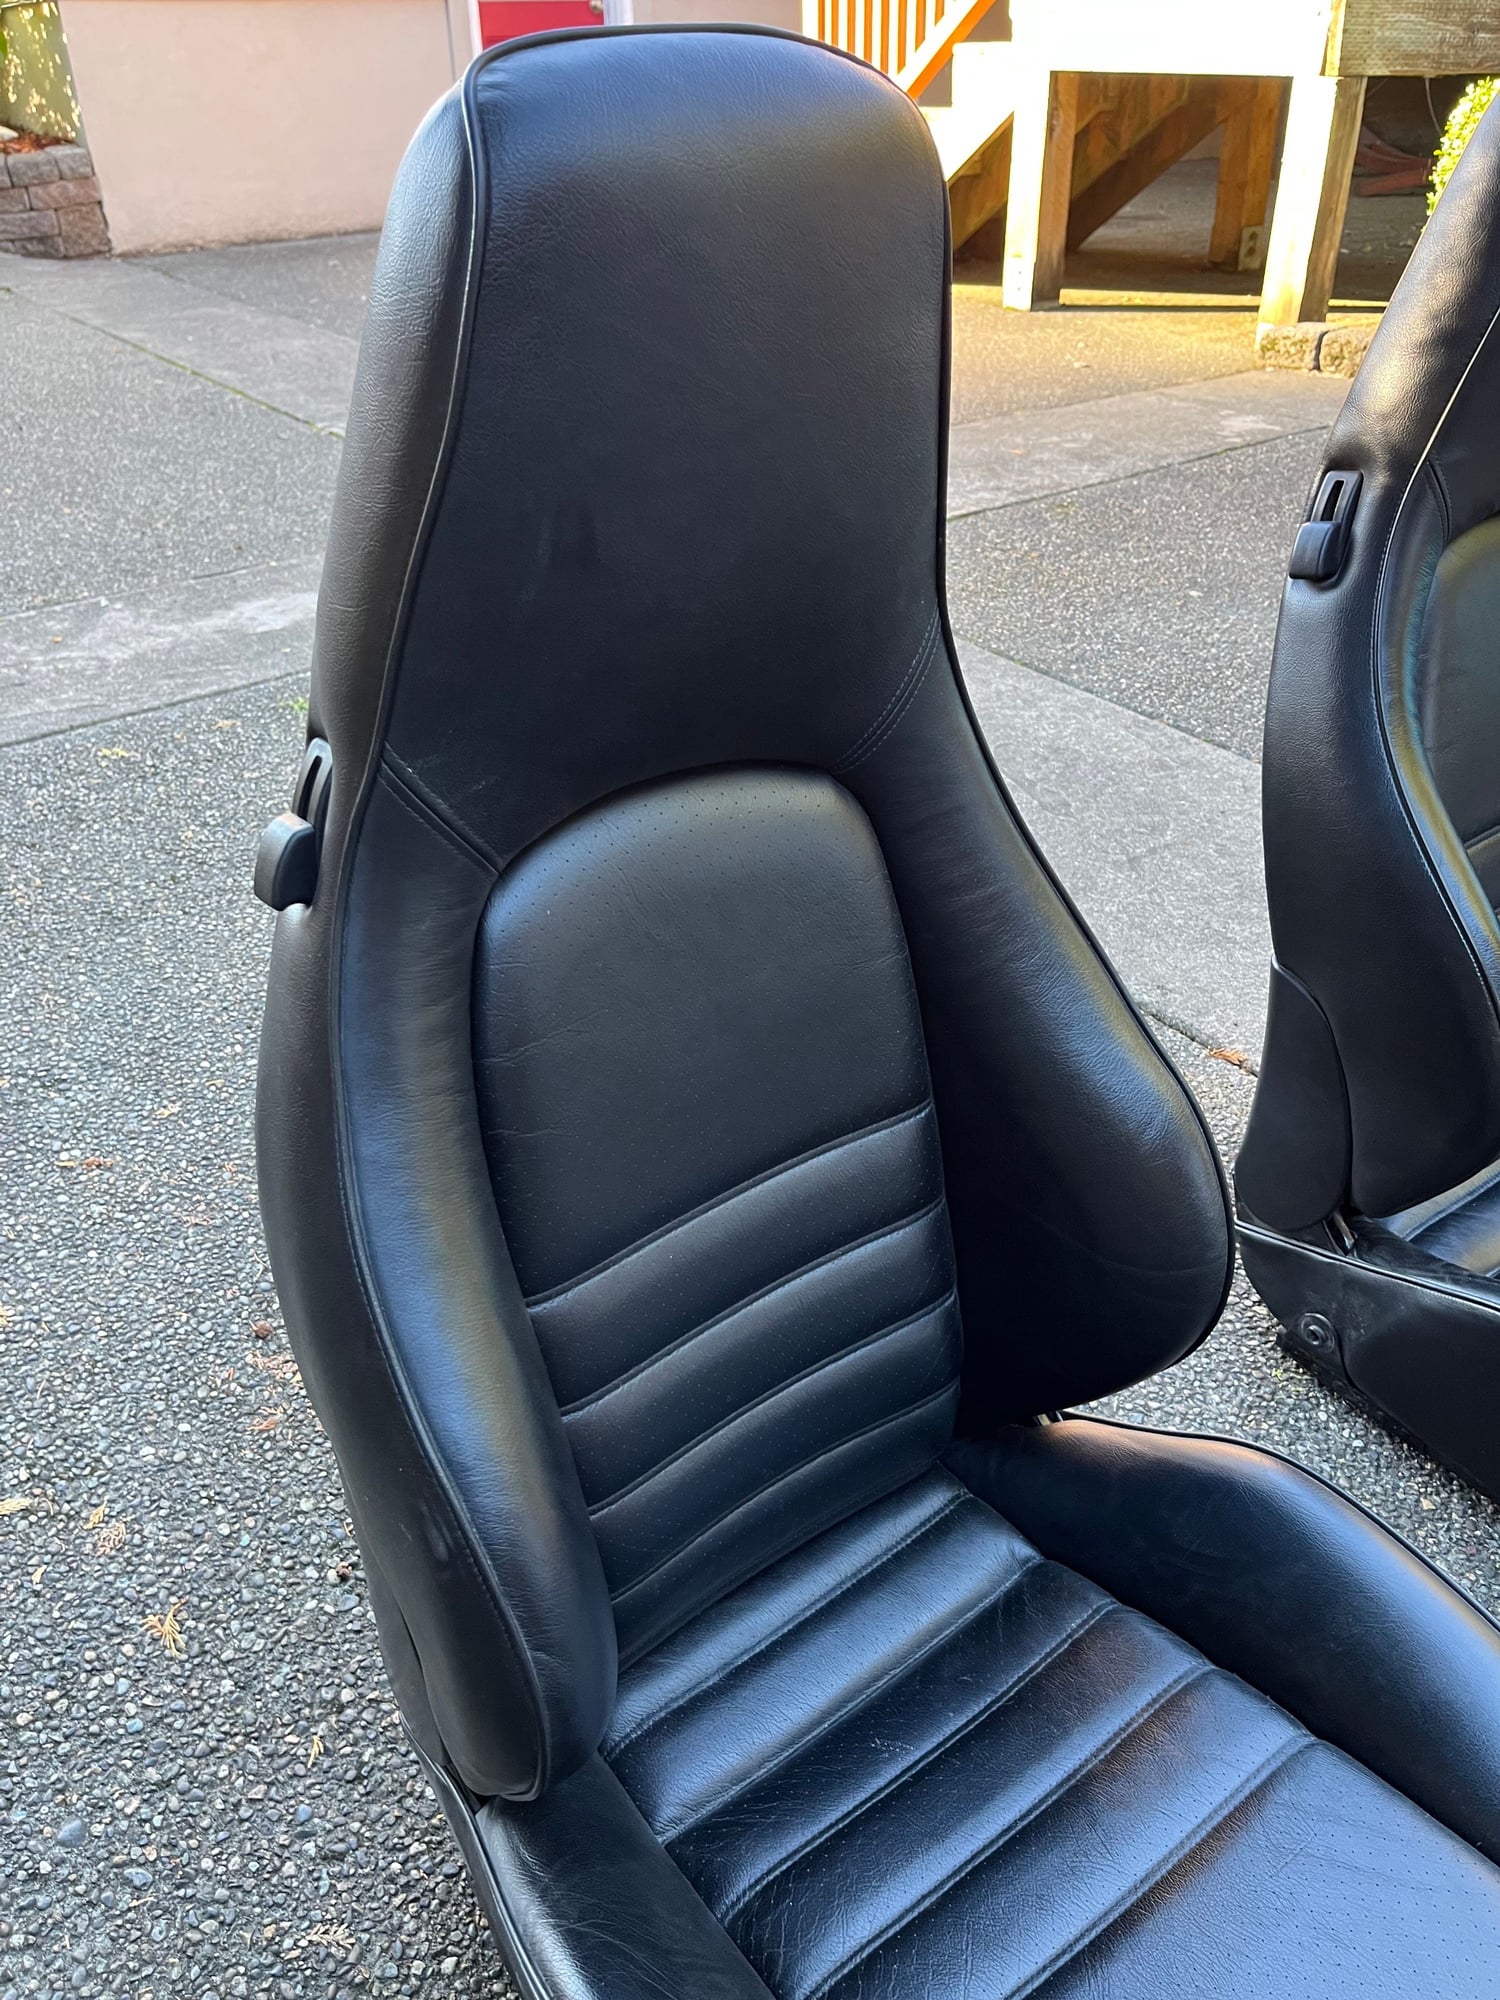 Interior/Upholstery - Porsche 964 Sport Seats - Used - 1985 to 1998 Porsche 911 - Seattle, WA 98112, United States